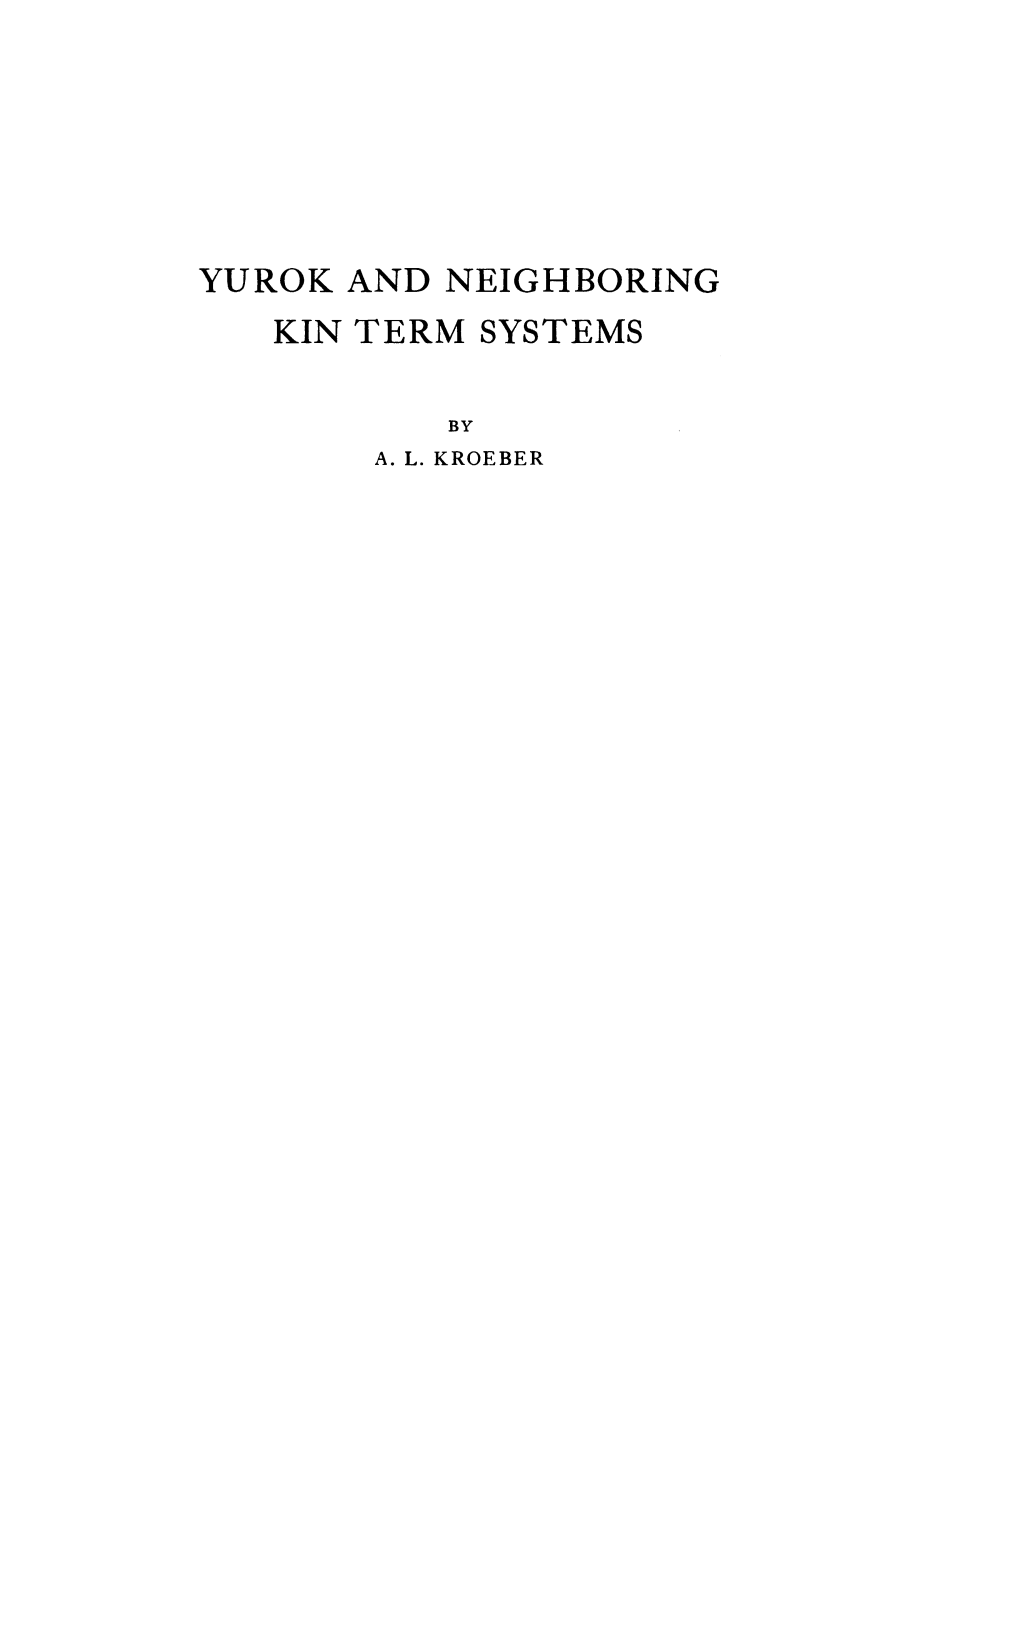 Yurok and Neighboring Kin Term Systems